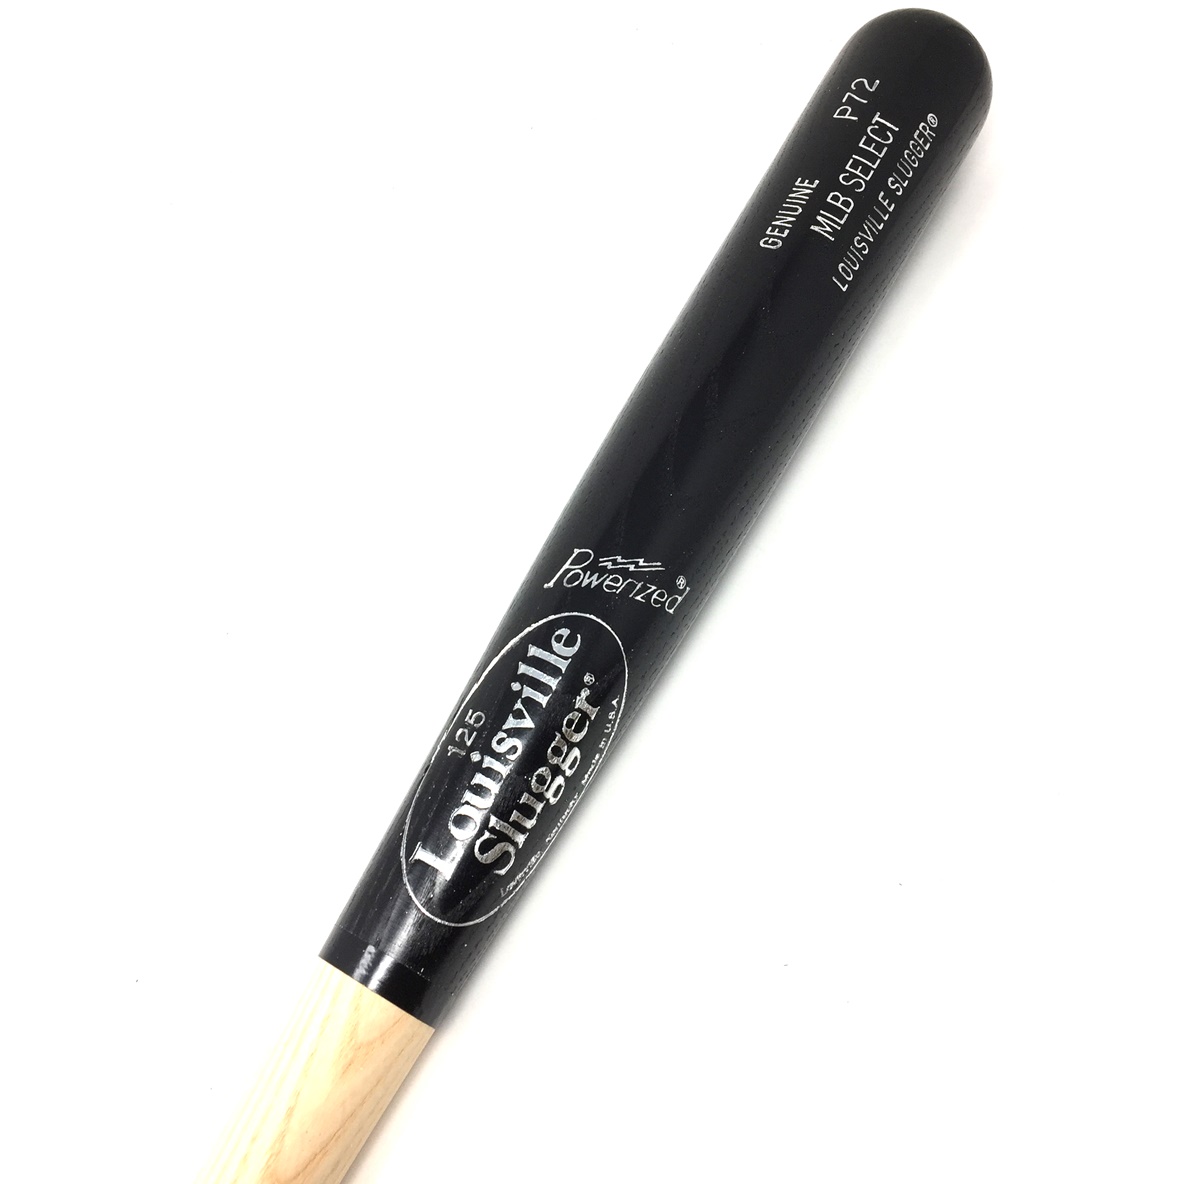 louisville-slugger-p72-mlb-select-ash-wood-baseball-bat-33-inch-cupped WBBP14P72CGW-33 Louisville  <p>Louisville Slugger MLB Select Ash Wood Baseball Bat. P72 Turning Model.</p>